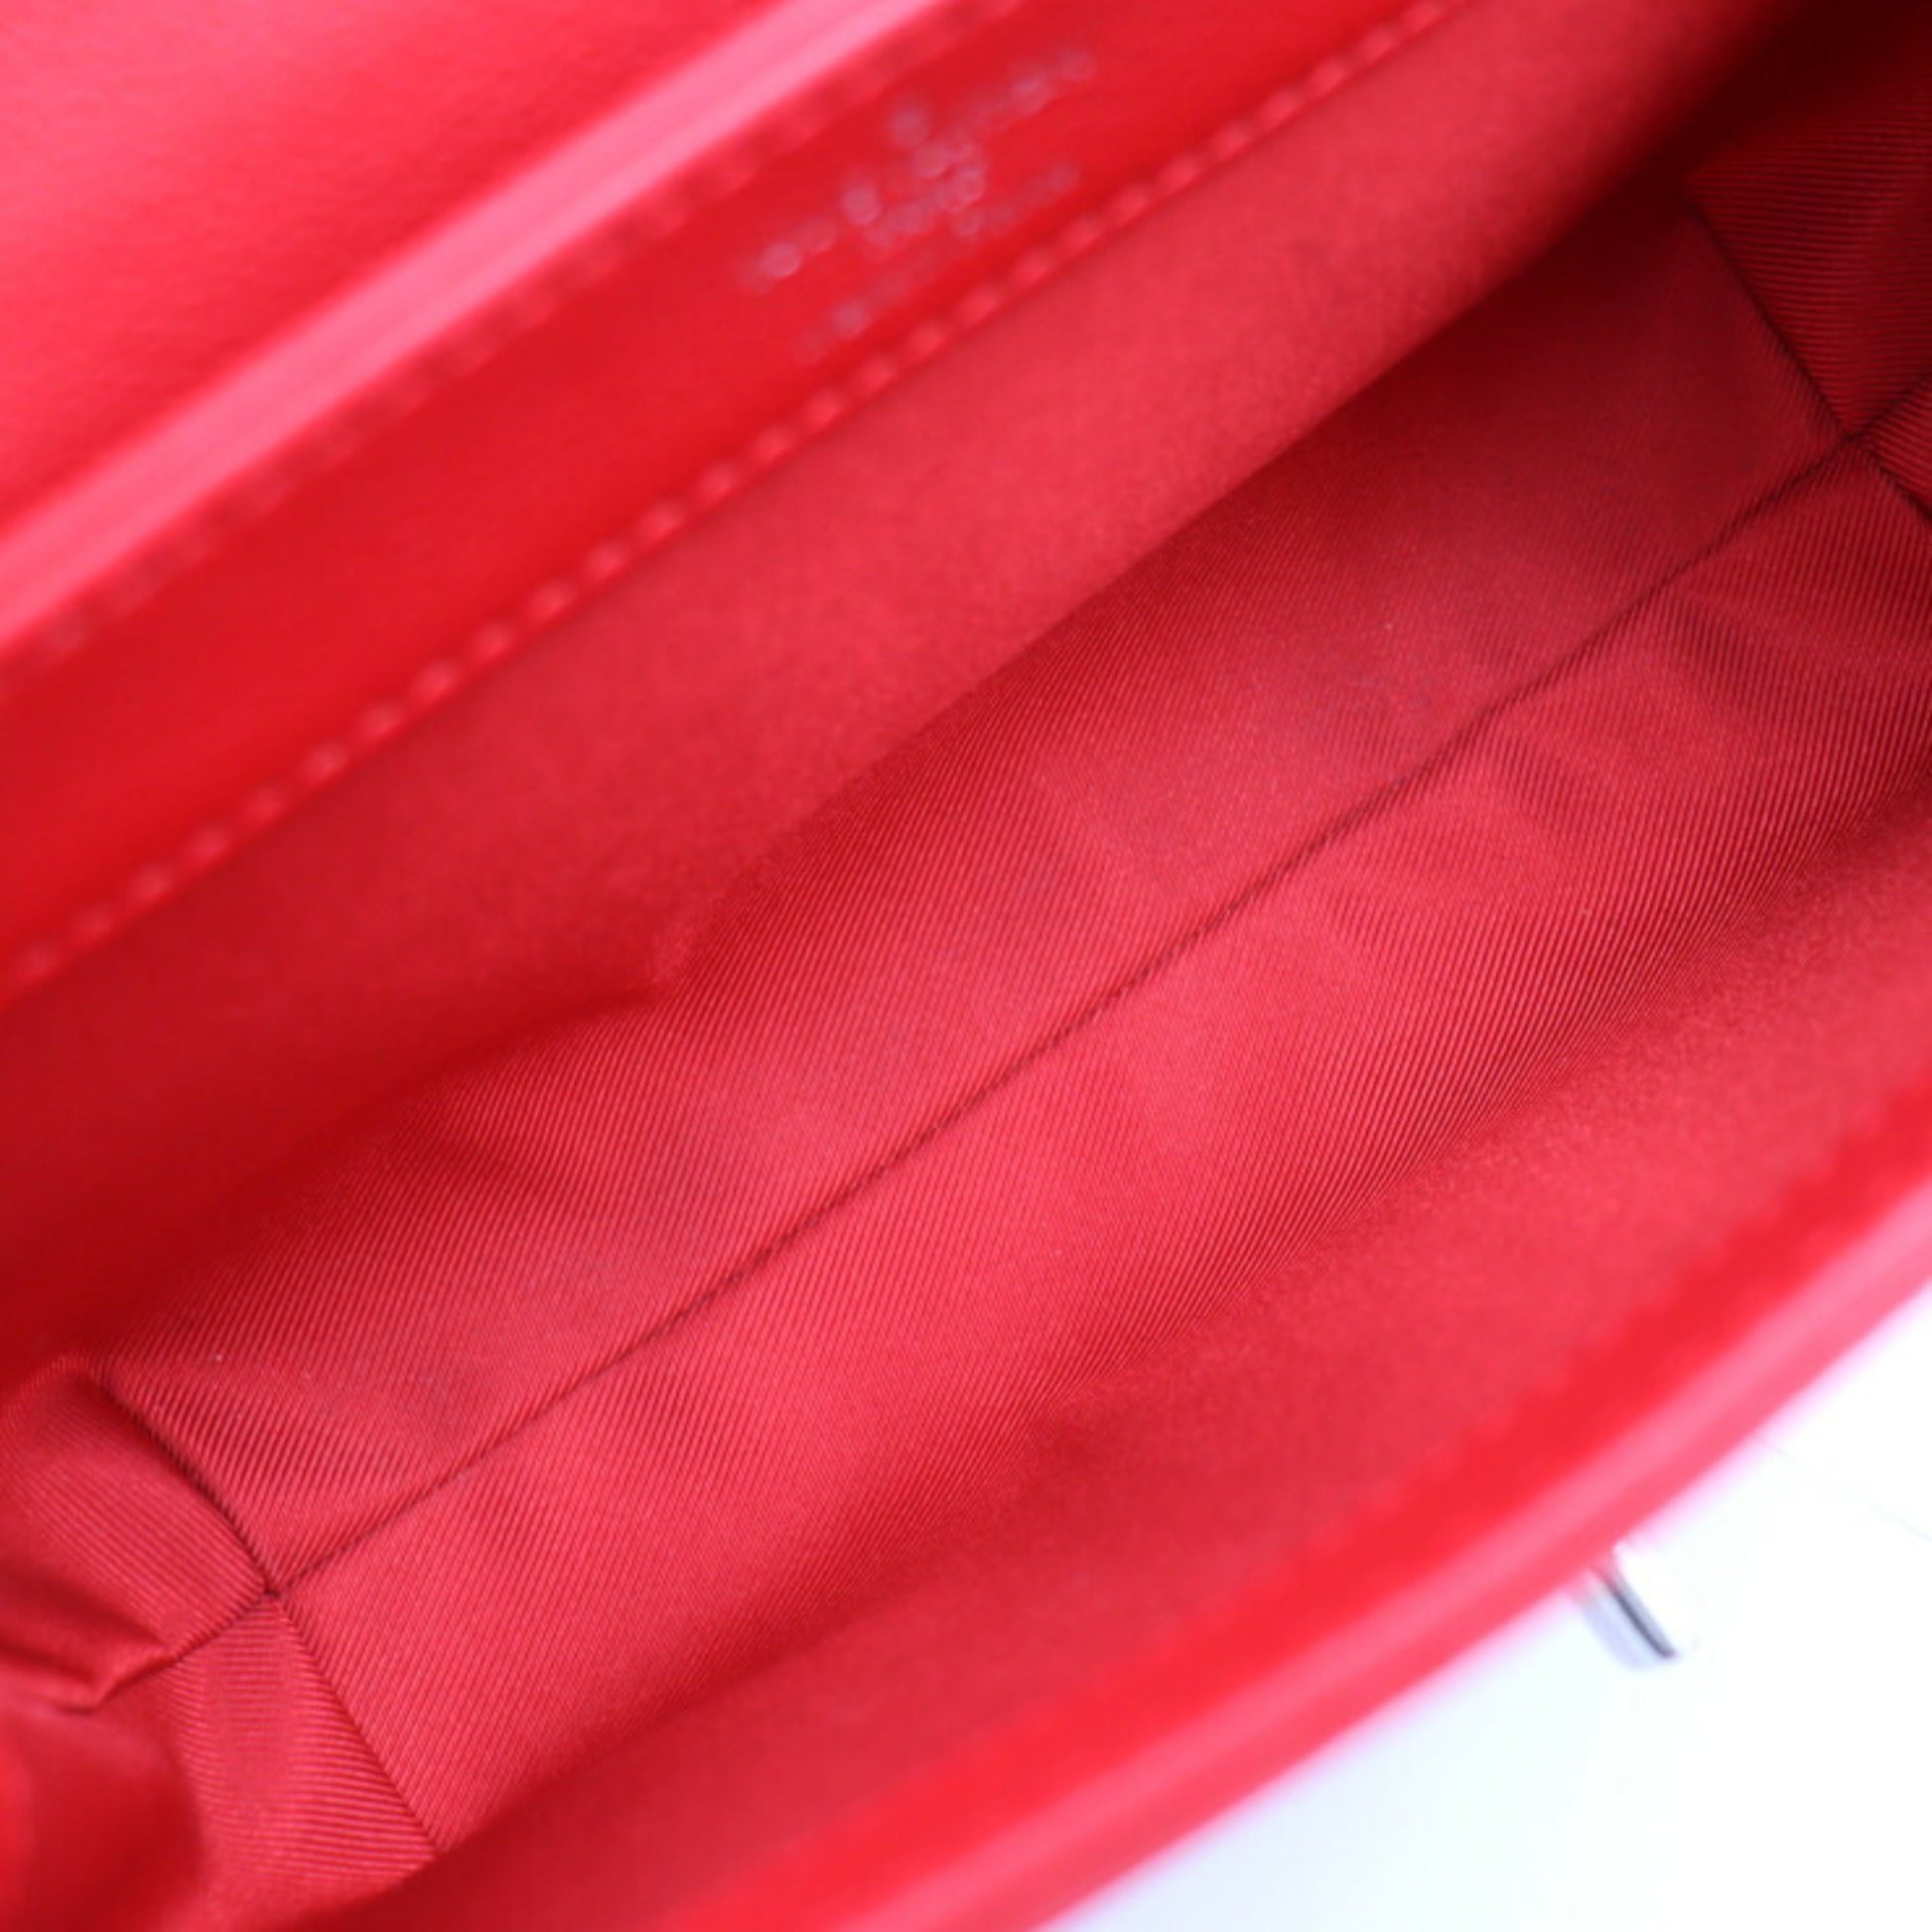 LOUIS VUITTON Louis Vuitton Lock Me 2 BB Shoulder Bag M51202 Calf Ruby  Silver Hardware 2WAY